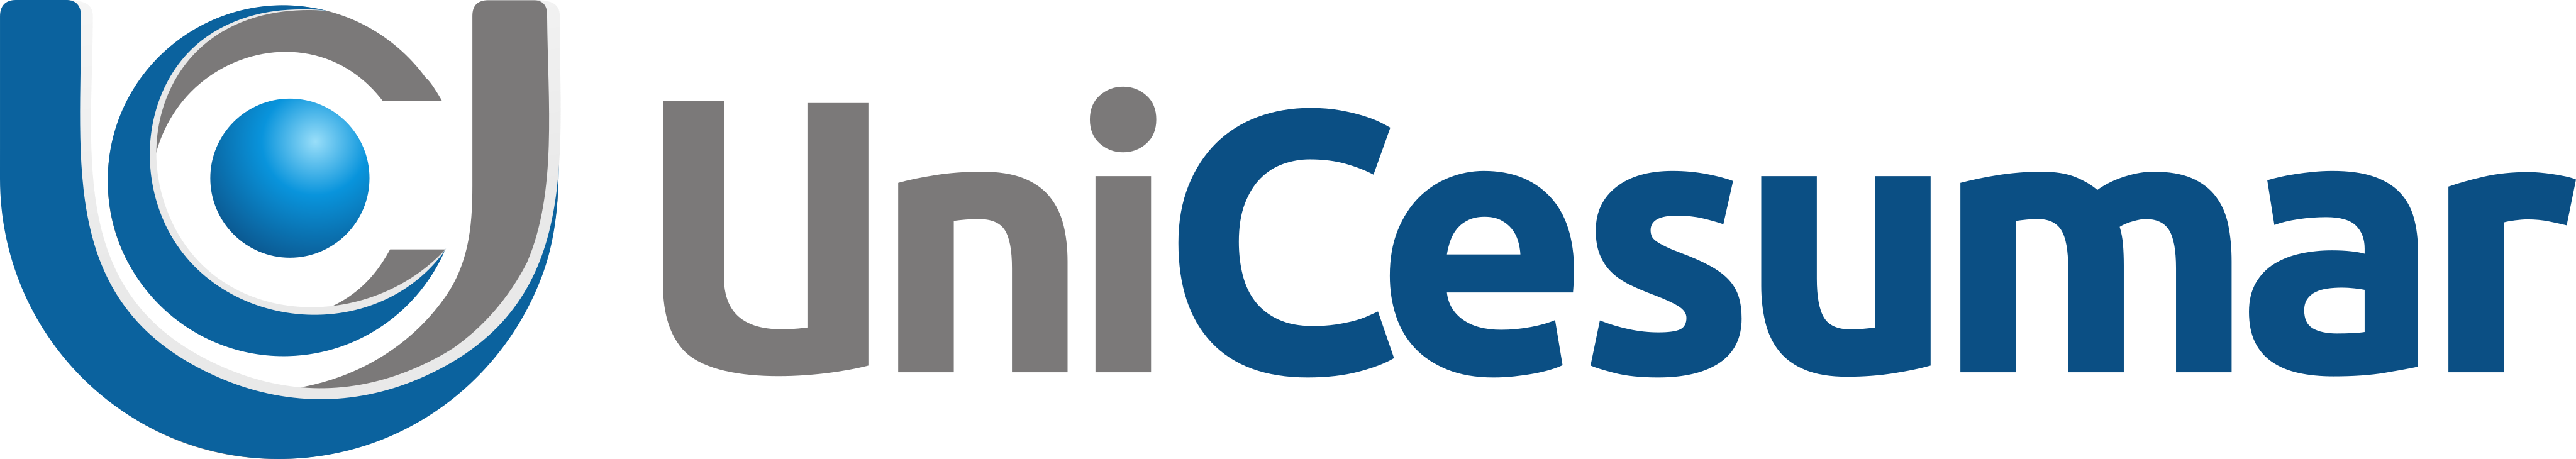 Unicesumar Logo.